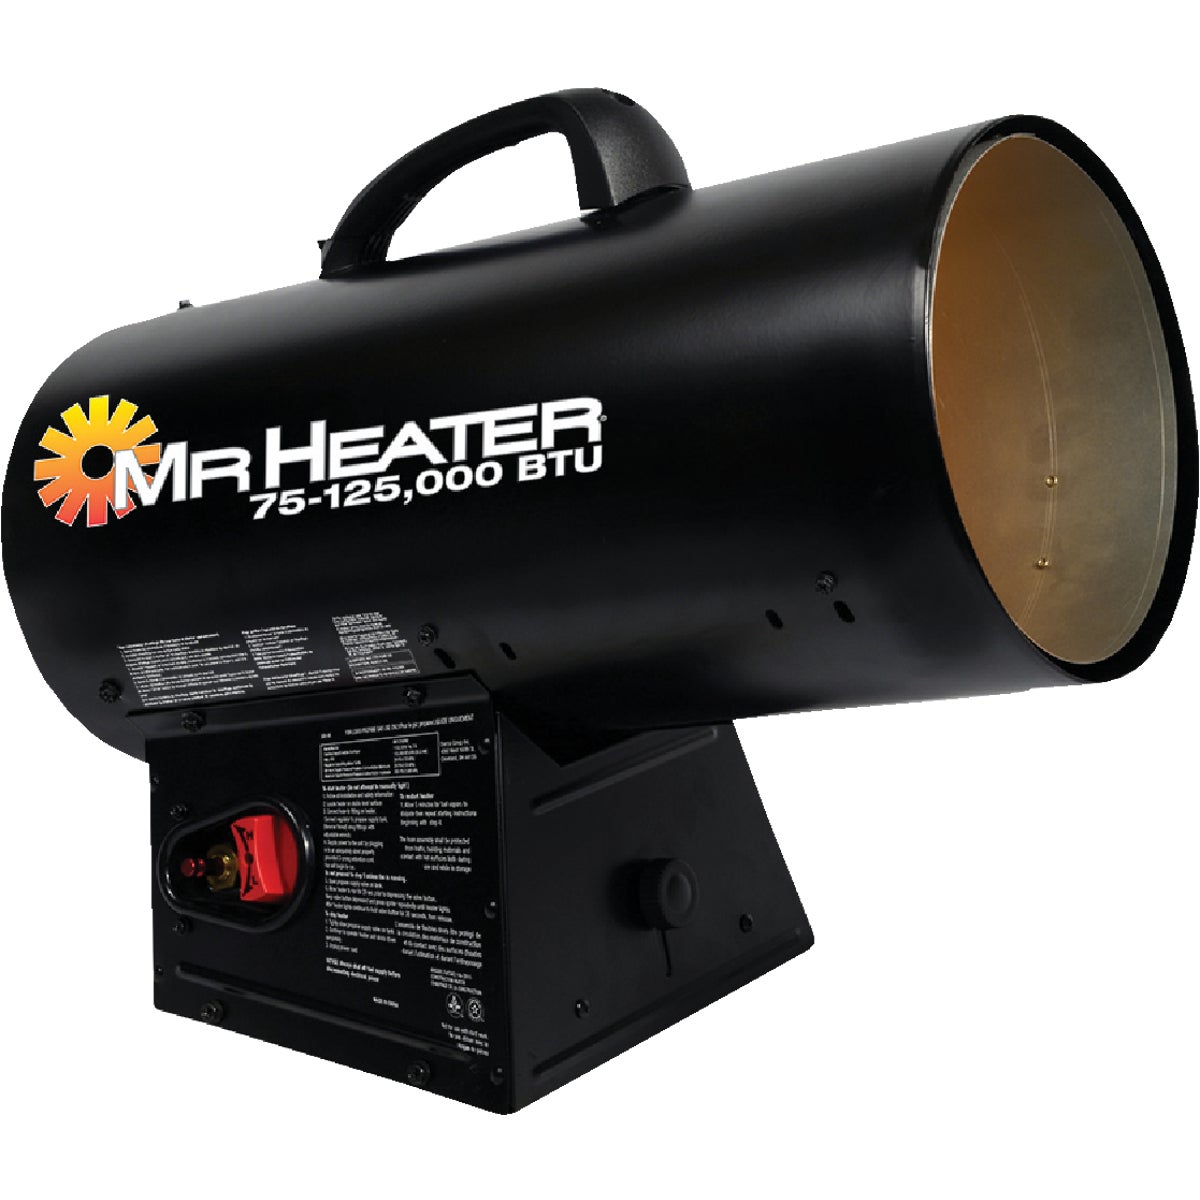 MR. HEATER 125,000 BTU Propane QBT Forced Air Heater